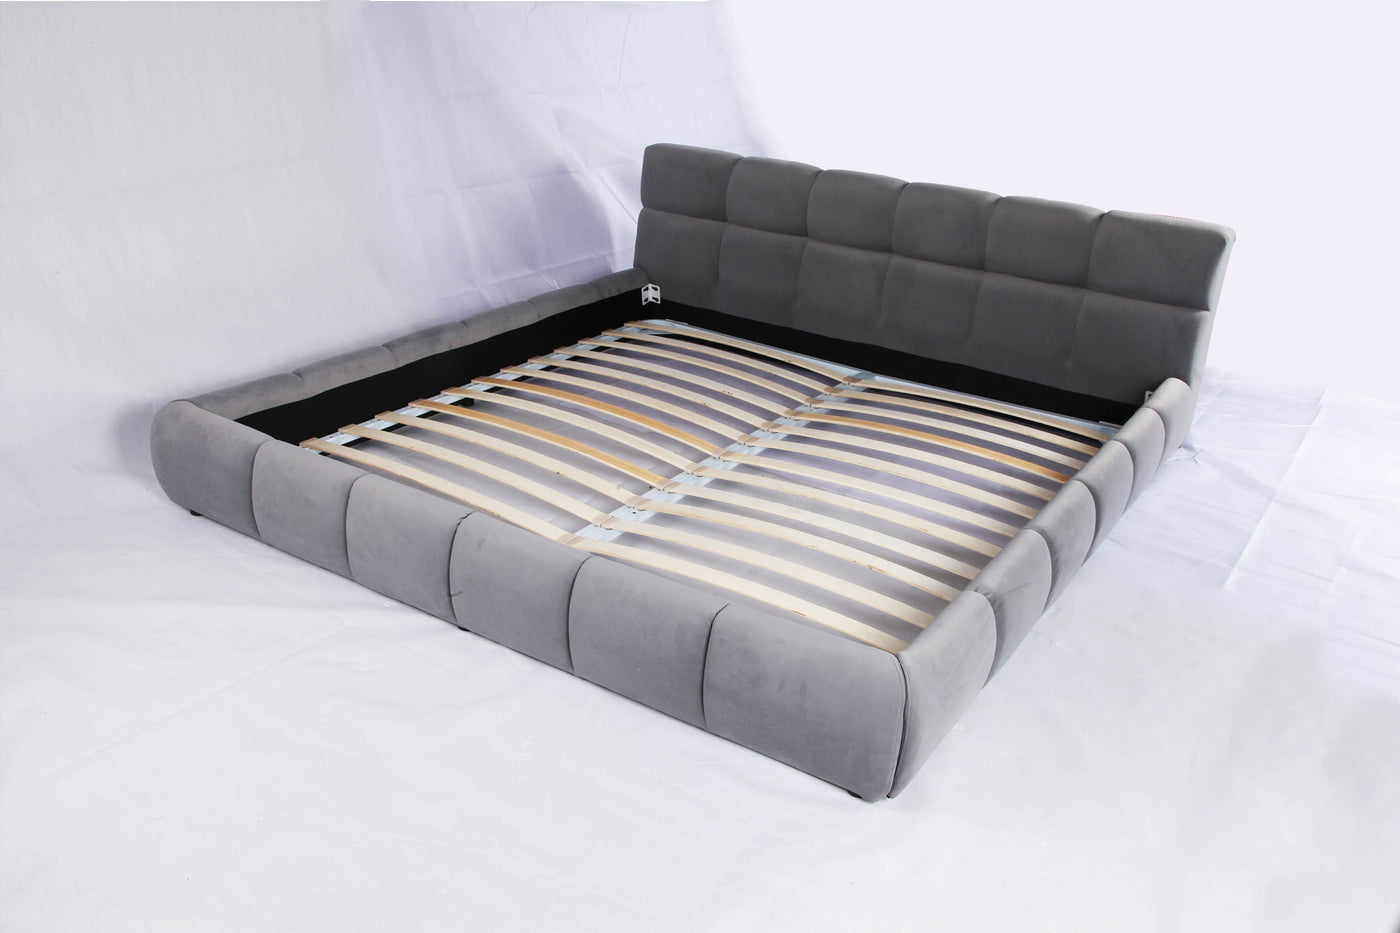 Tufty Bed - Retro Modern Designs